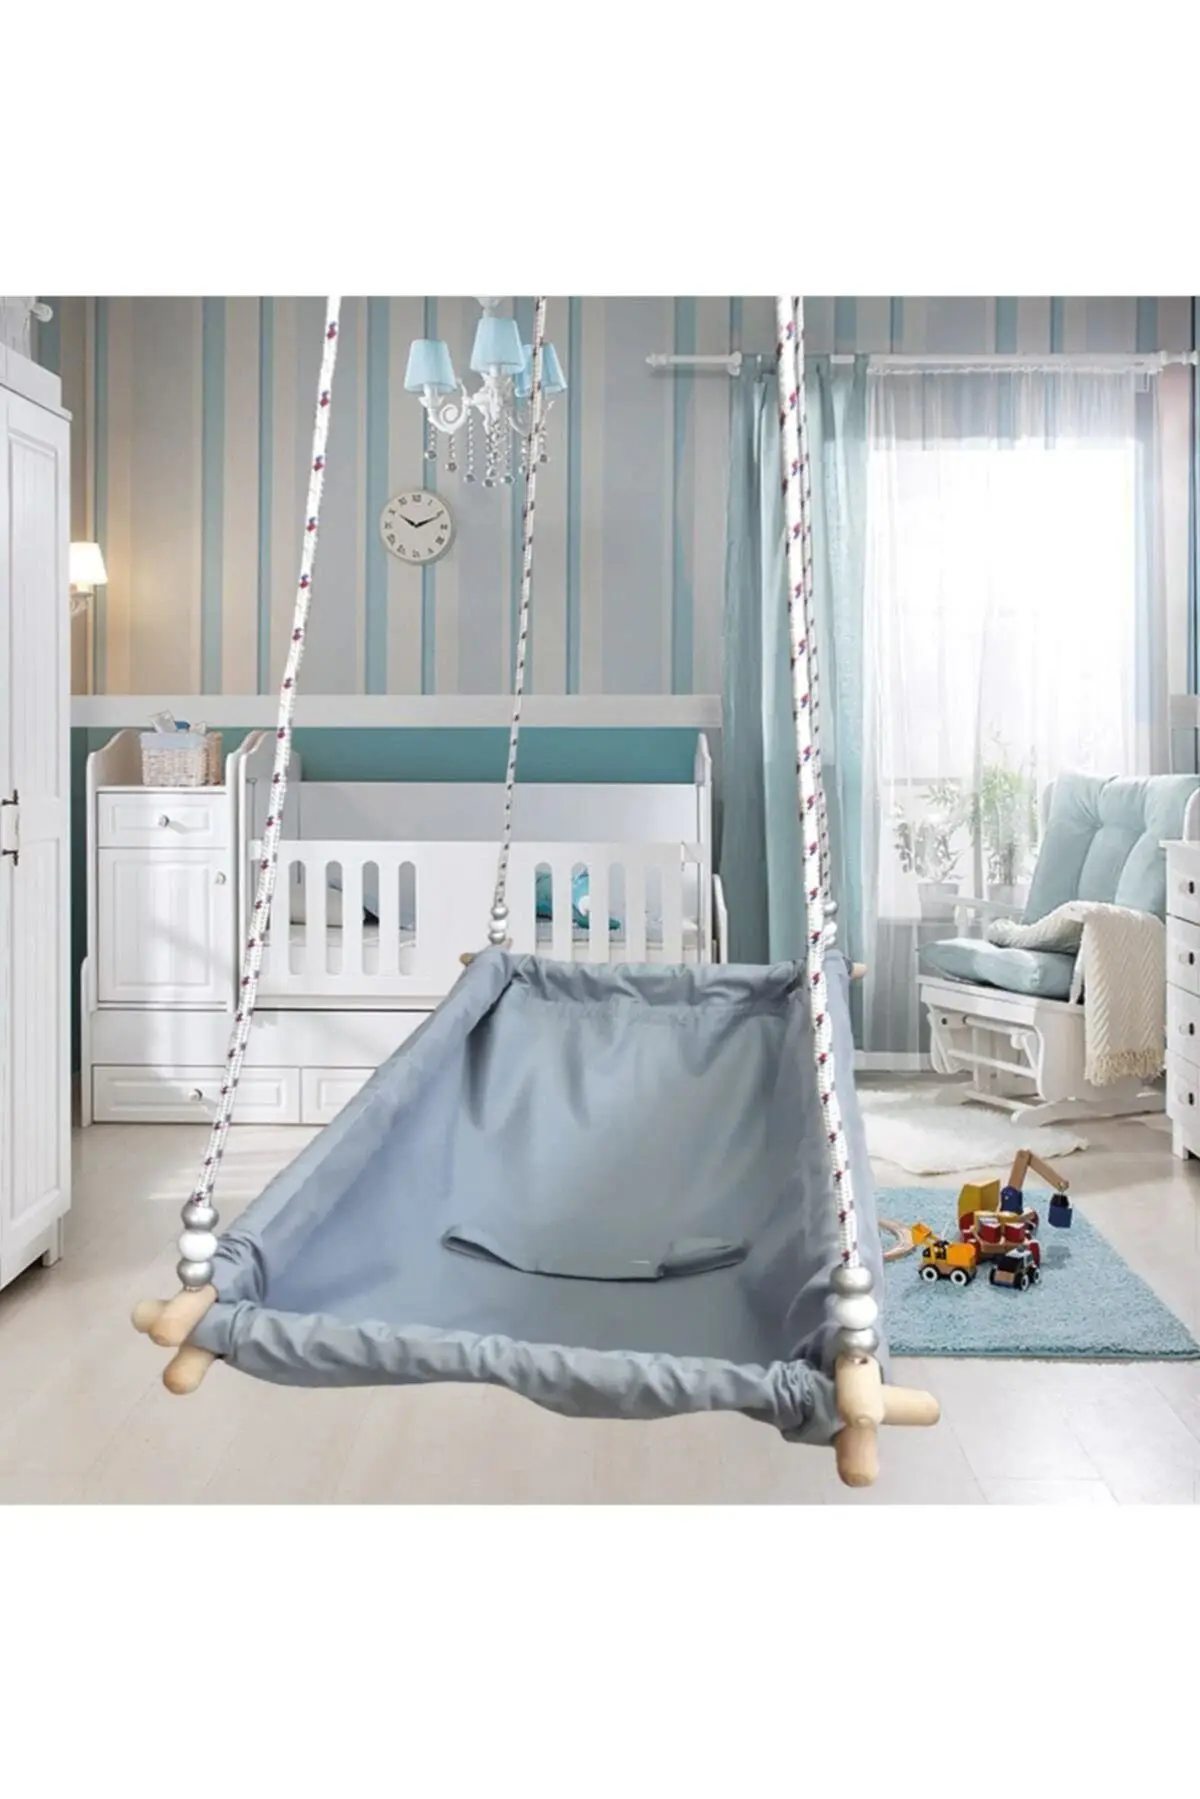 Home Decor Kids Room Wood Spring Hoppy Hammock Cradle Whoops Ceiling Hanging Swing Baby Bed Iskota Wire Rope